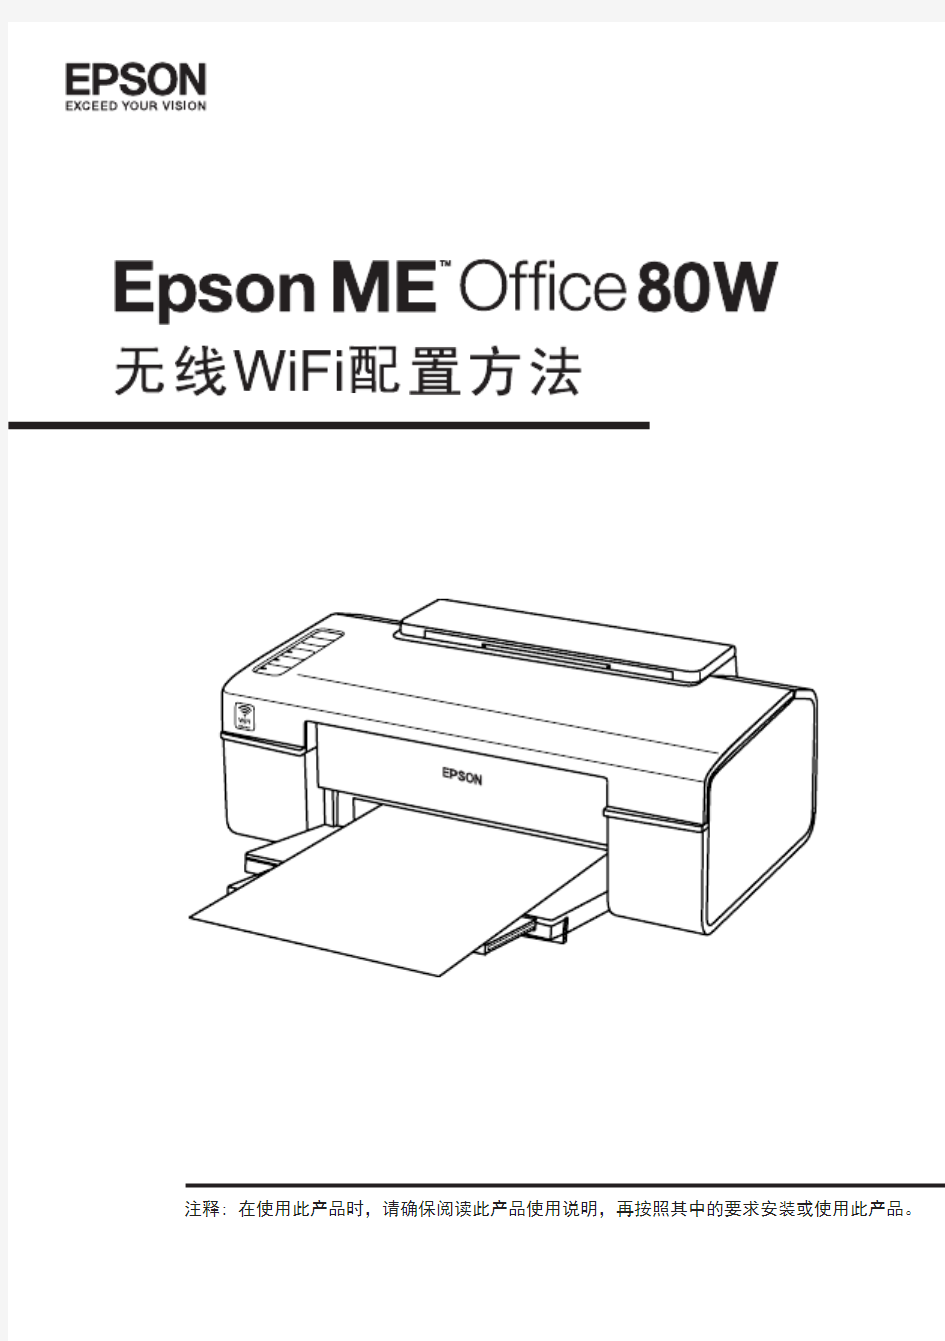 EPSON ME OFFICE 80W 无线WiFi打印配置手册